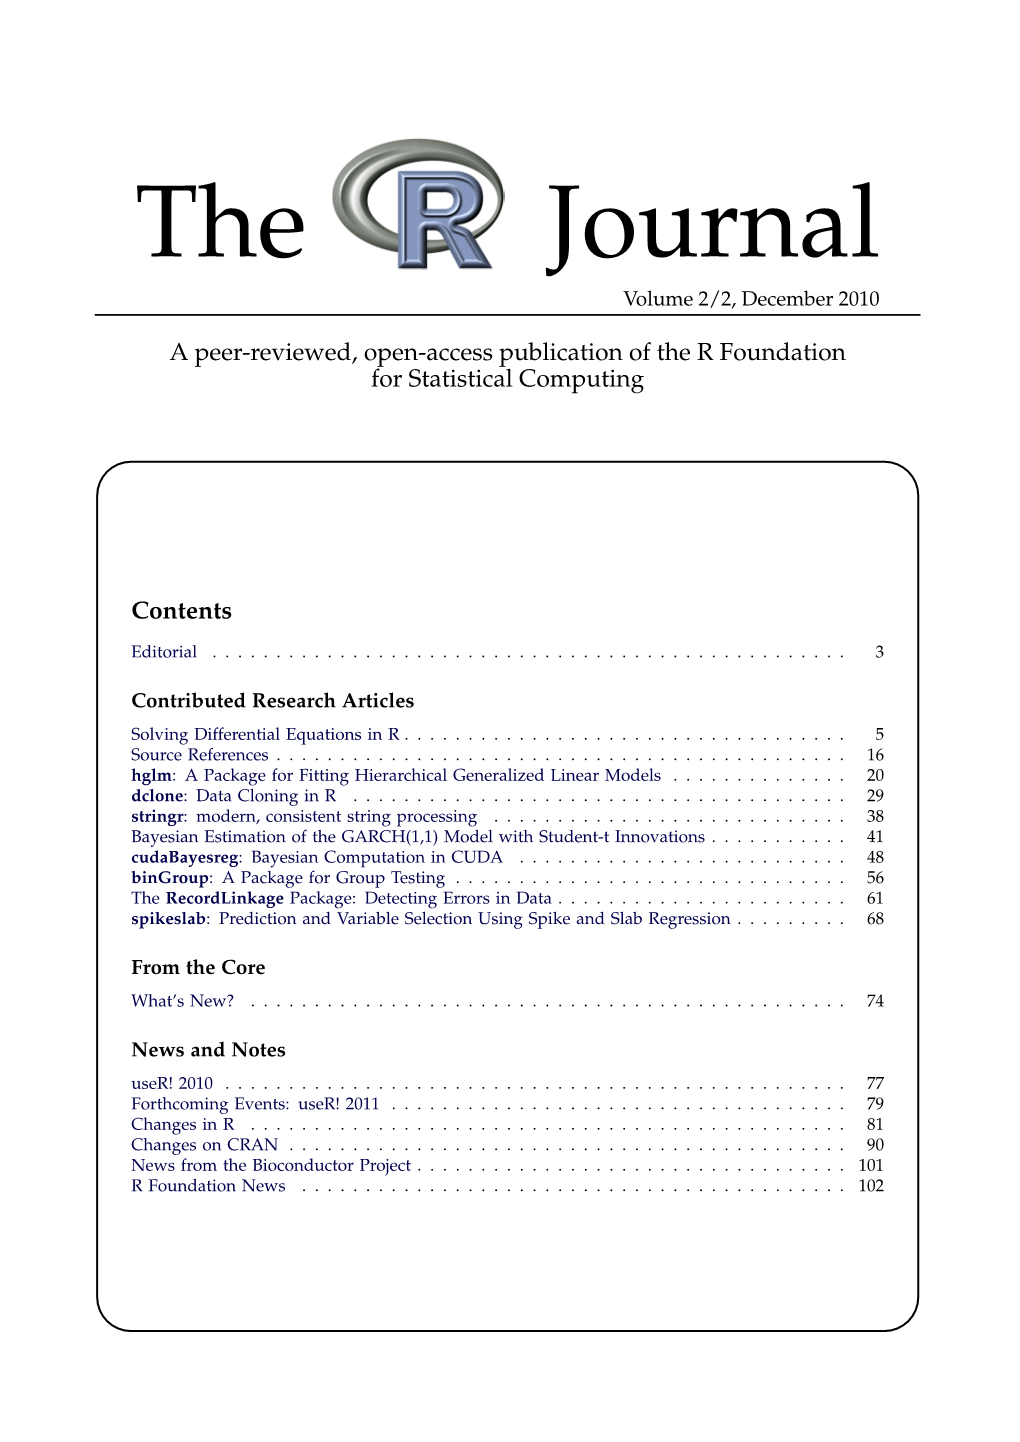 The R Journal Volume 2/2, December 2010